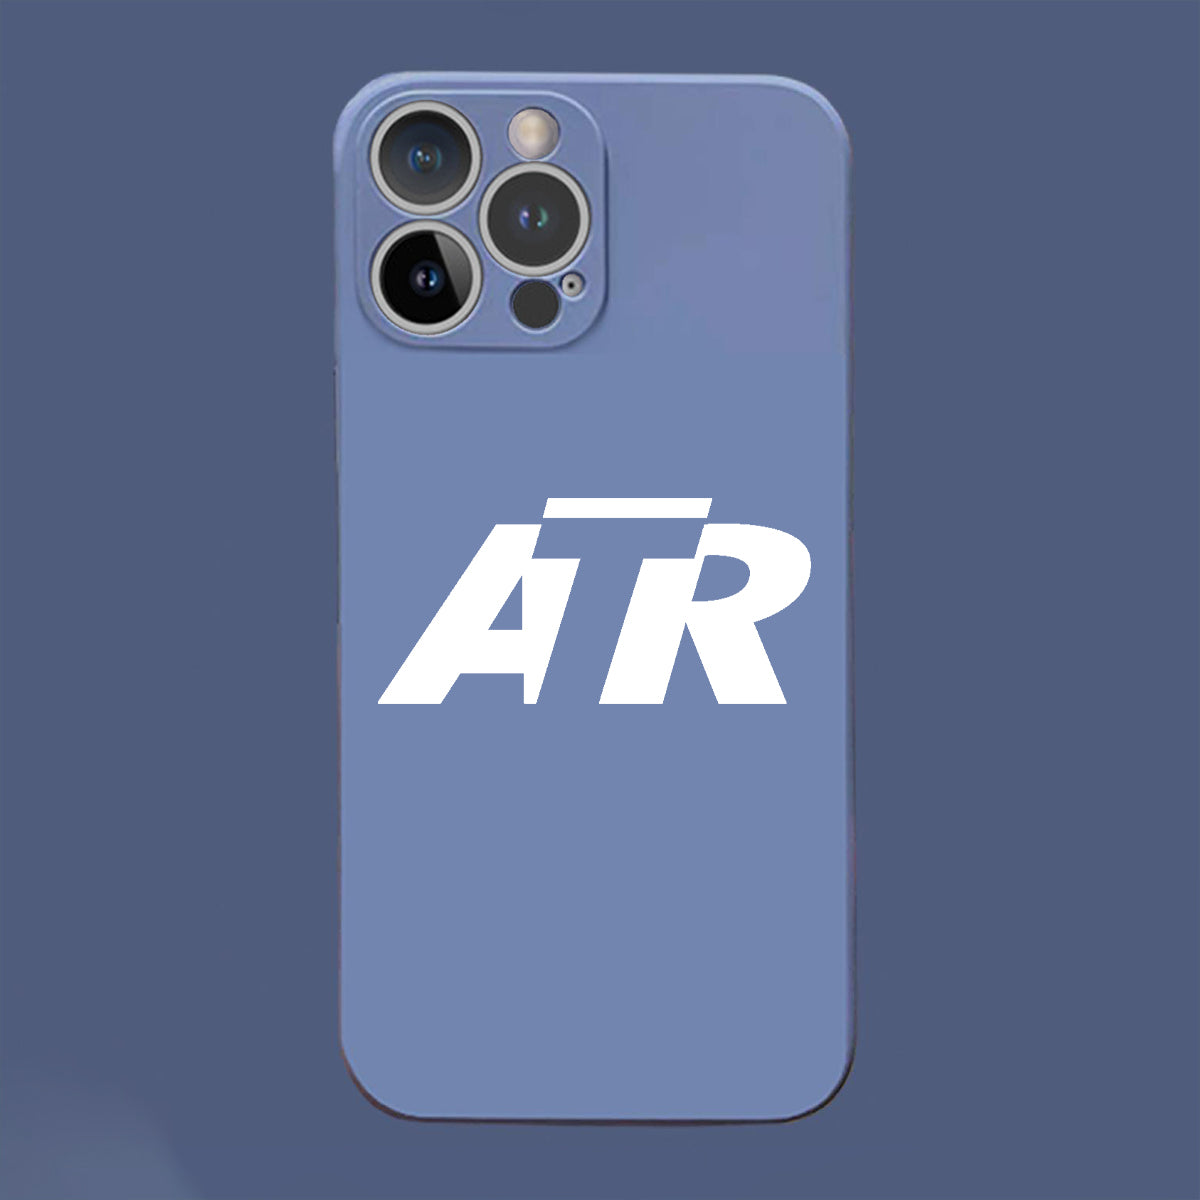 ATR & Text Designed Soft Silicone iPhone Cases